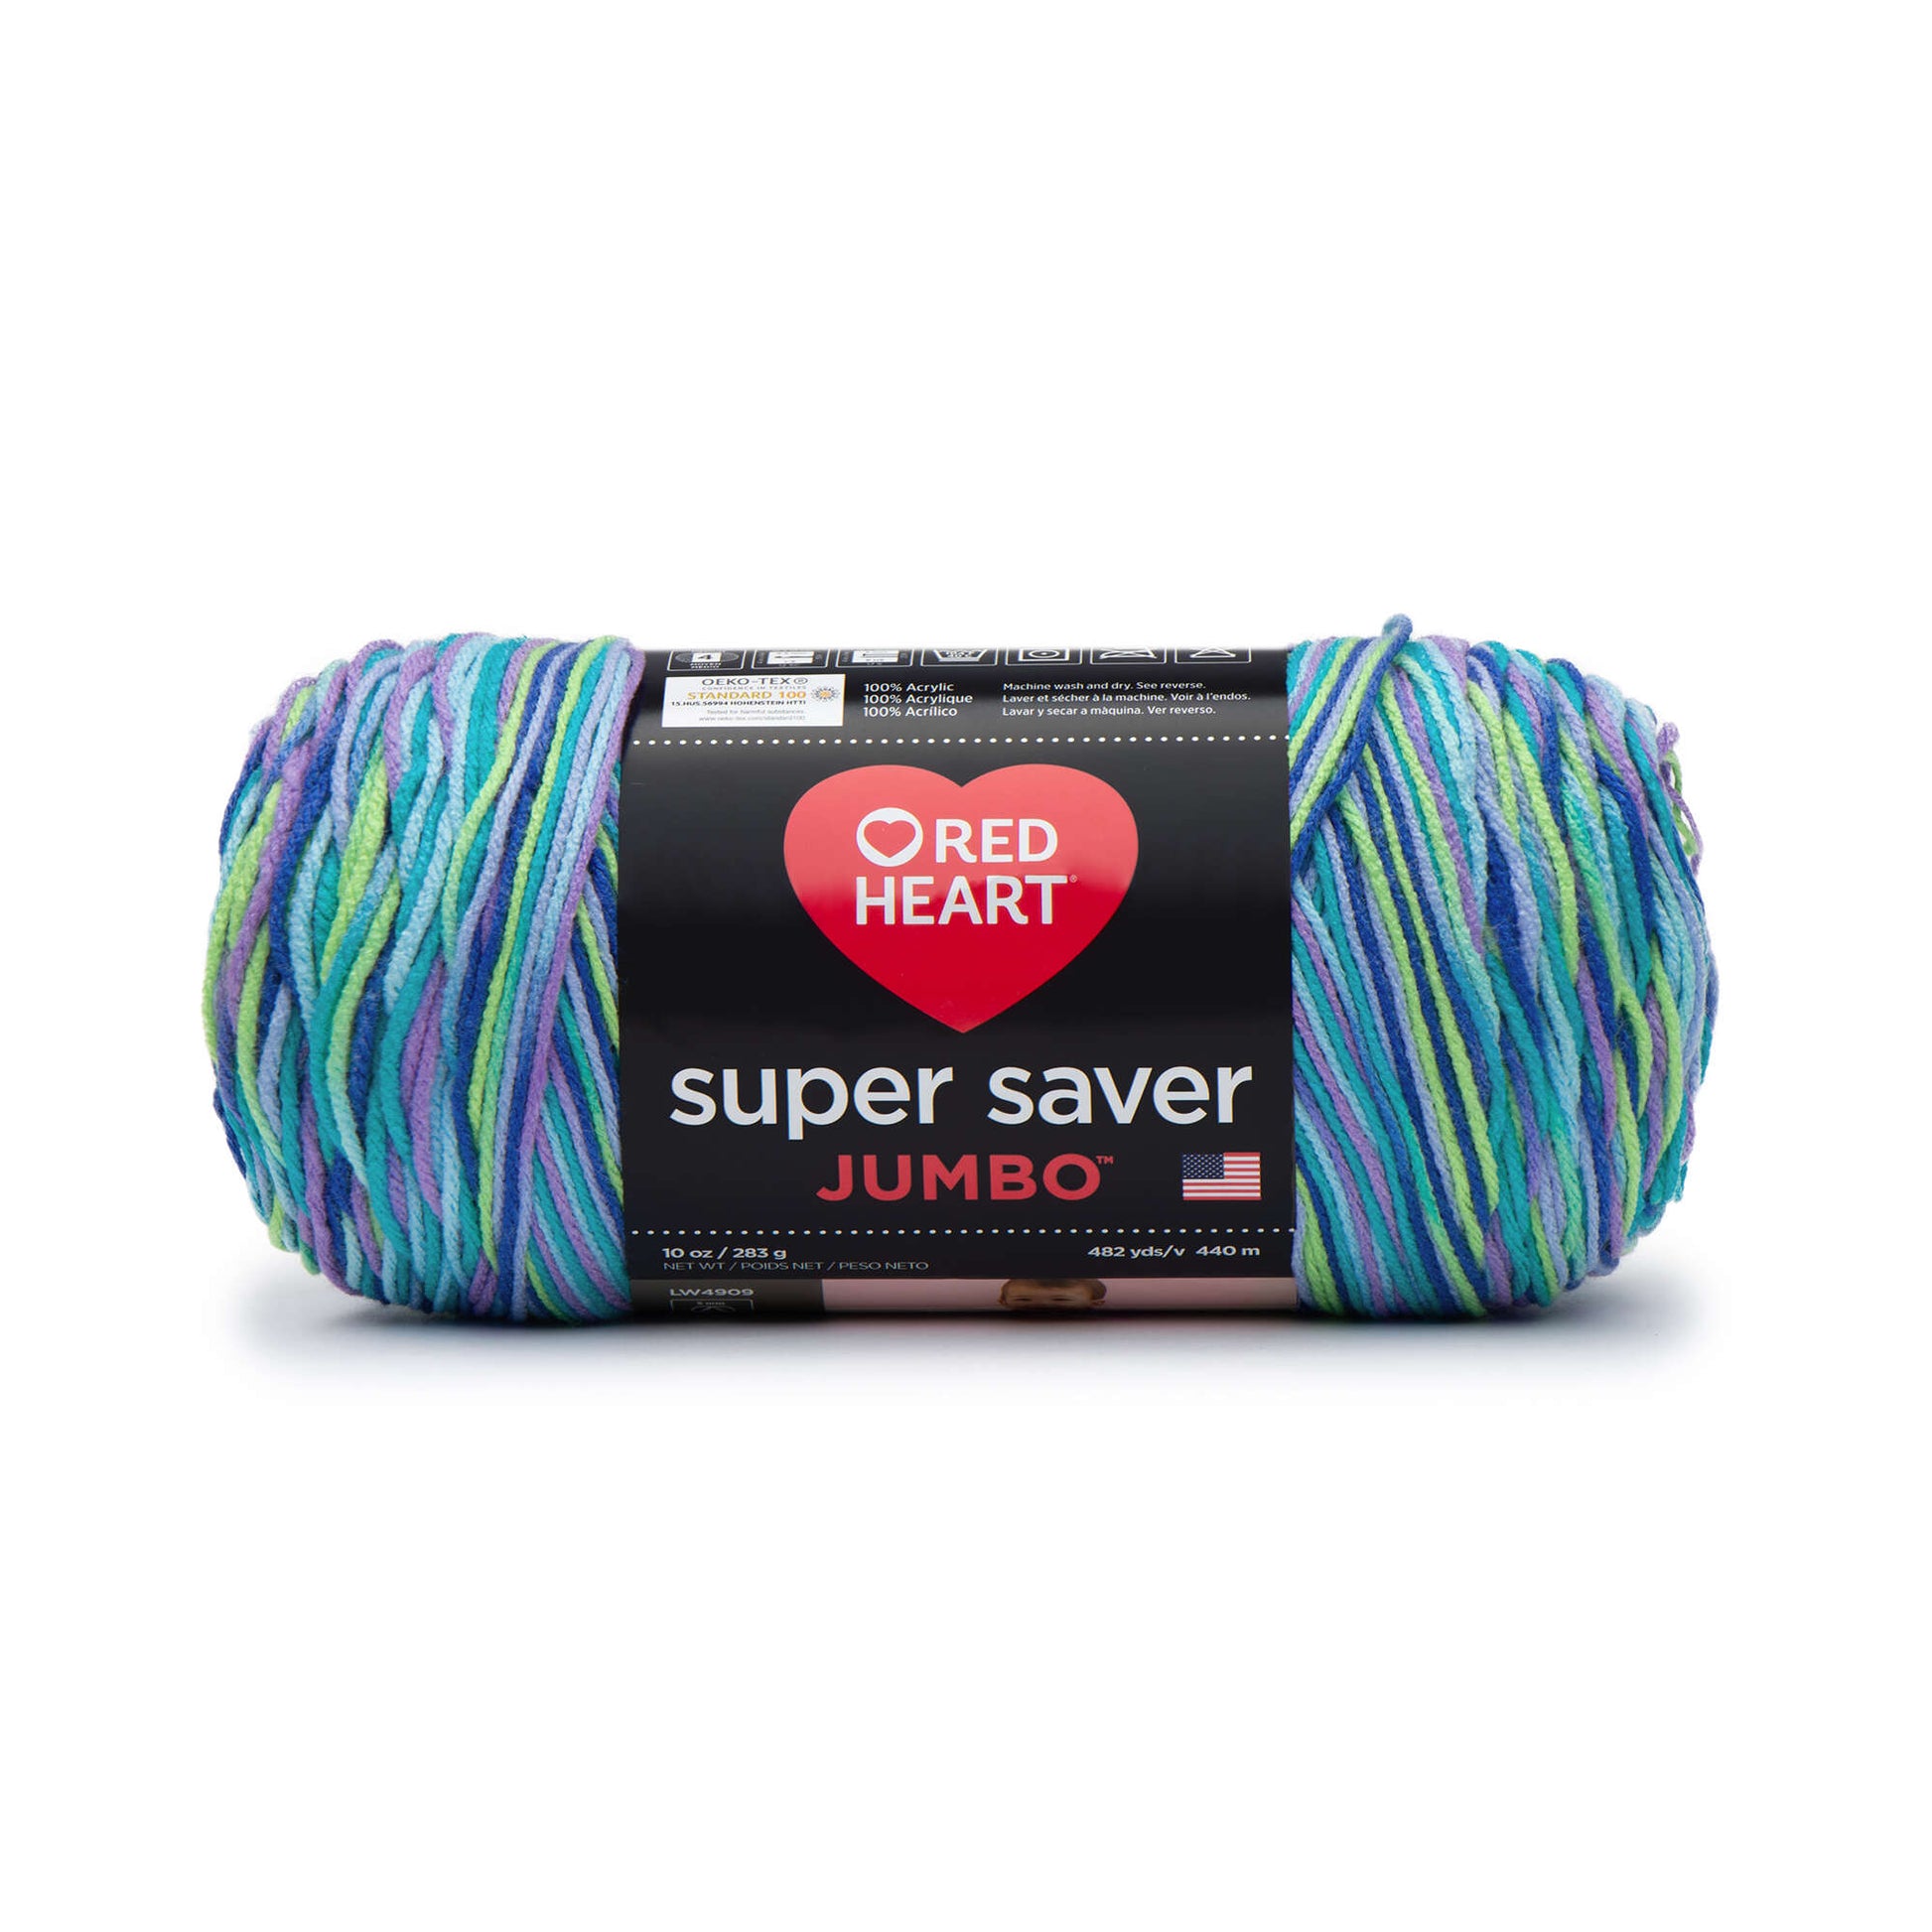 Red Heart Super Saver Wildflower Yarn - 3 Pack of 141g/5oz